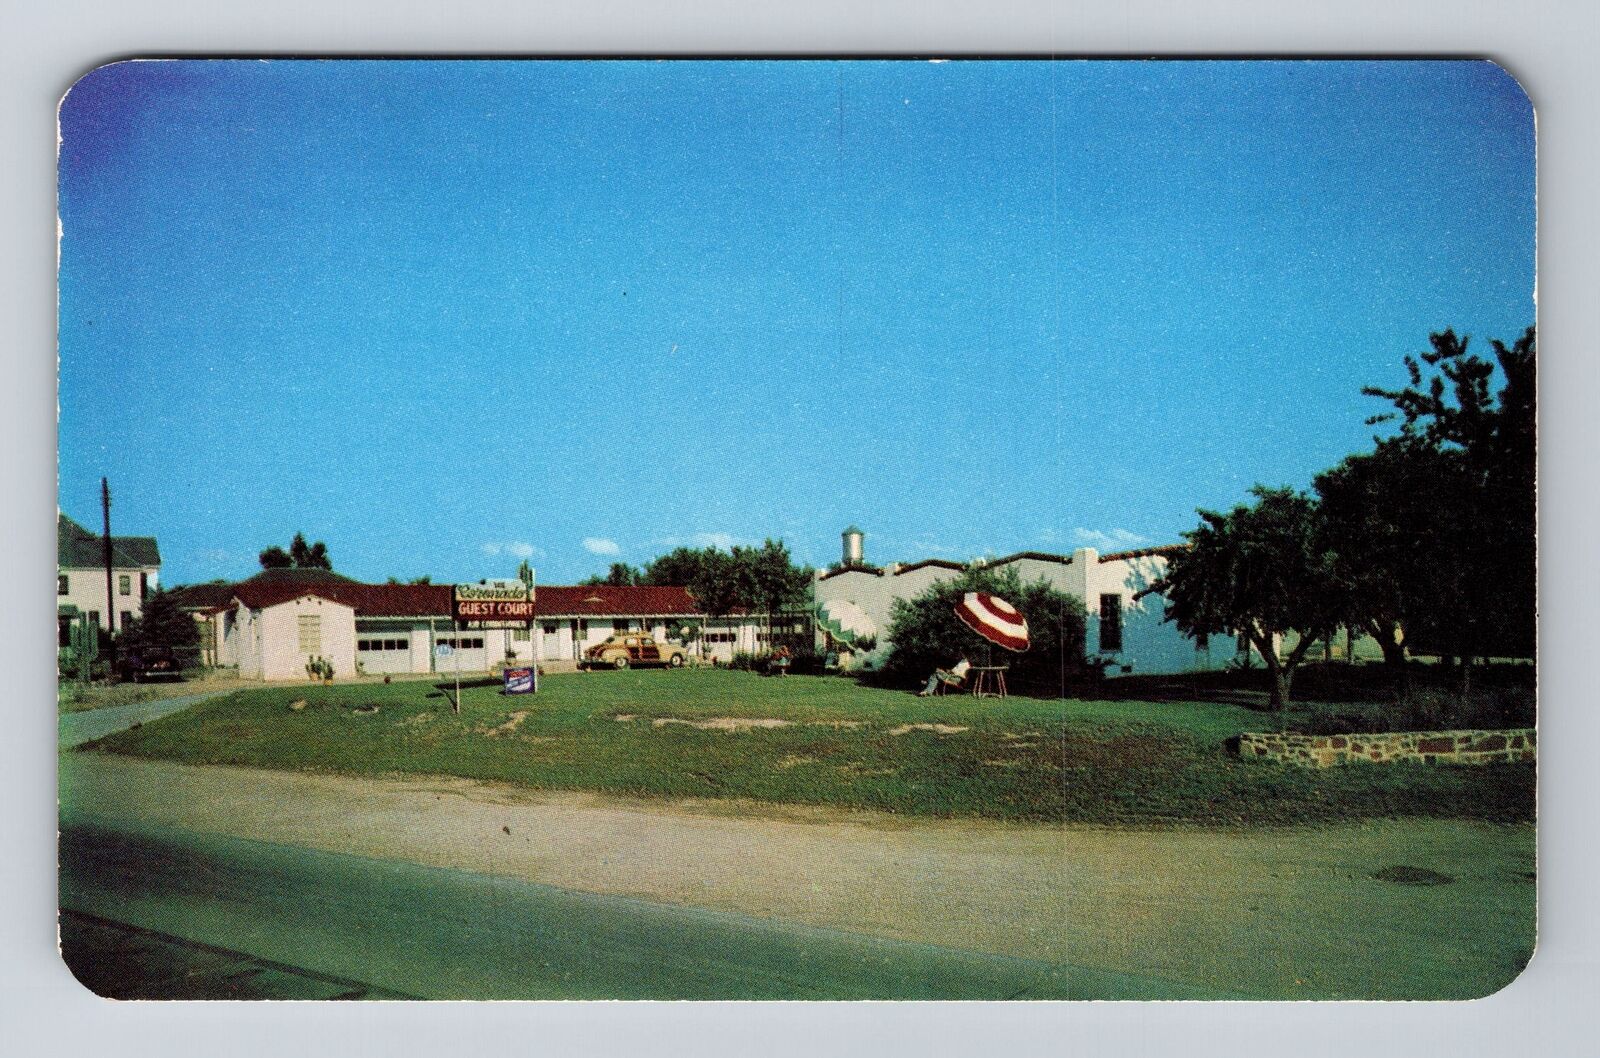 Weatherford TX-Texas, Coronado Guest Court Advertising, Antique Vintage Postcard